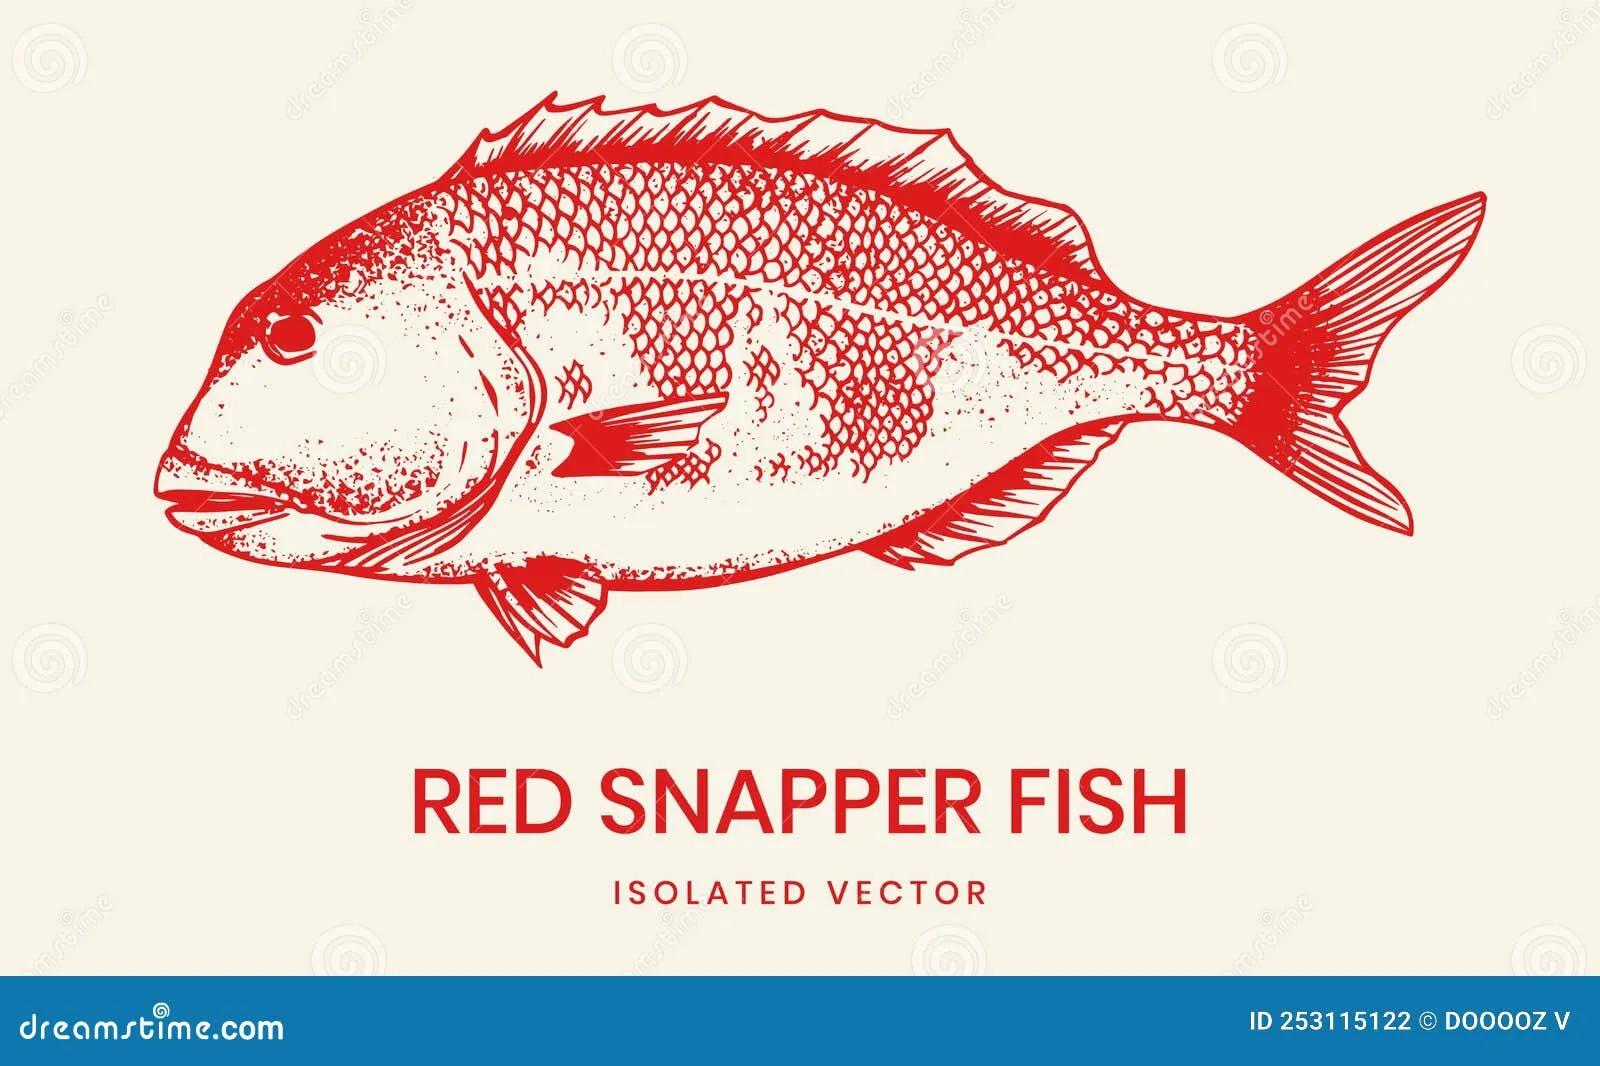 Red Snapper Fish Illustration Drawing Stock Vector - Illustration of ...